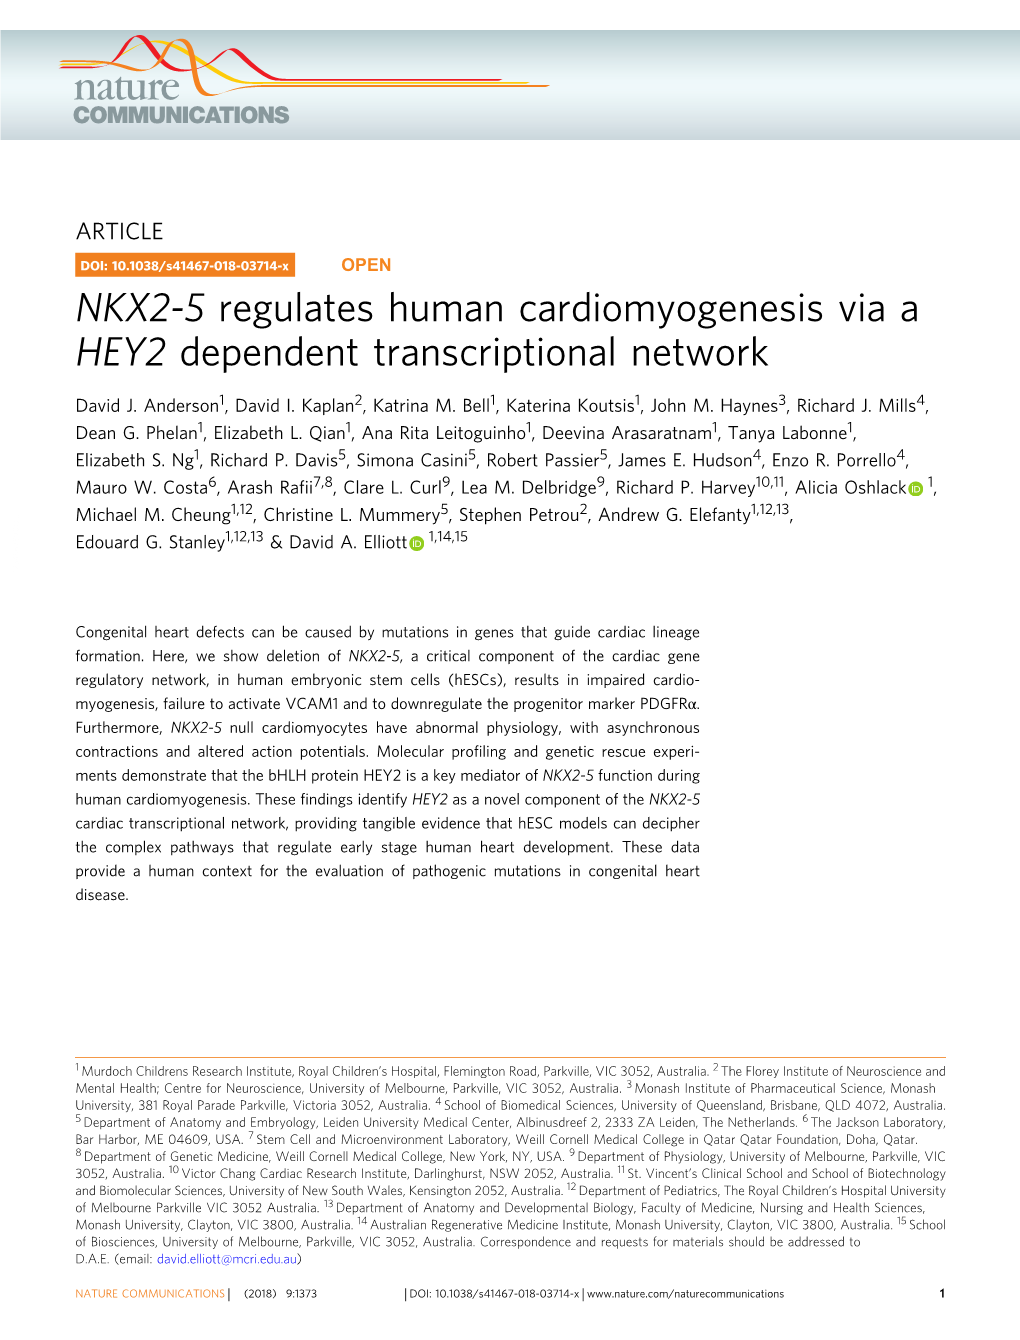 NKX2-5 Regulates Human Cardiomyogenesis Via a HEY2 Dependent Transcriptional Network